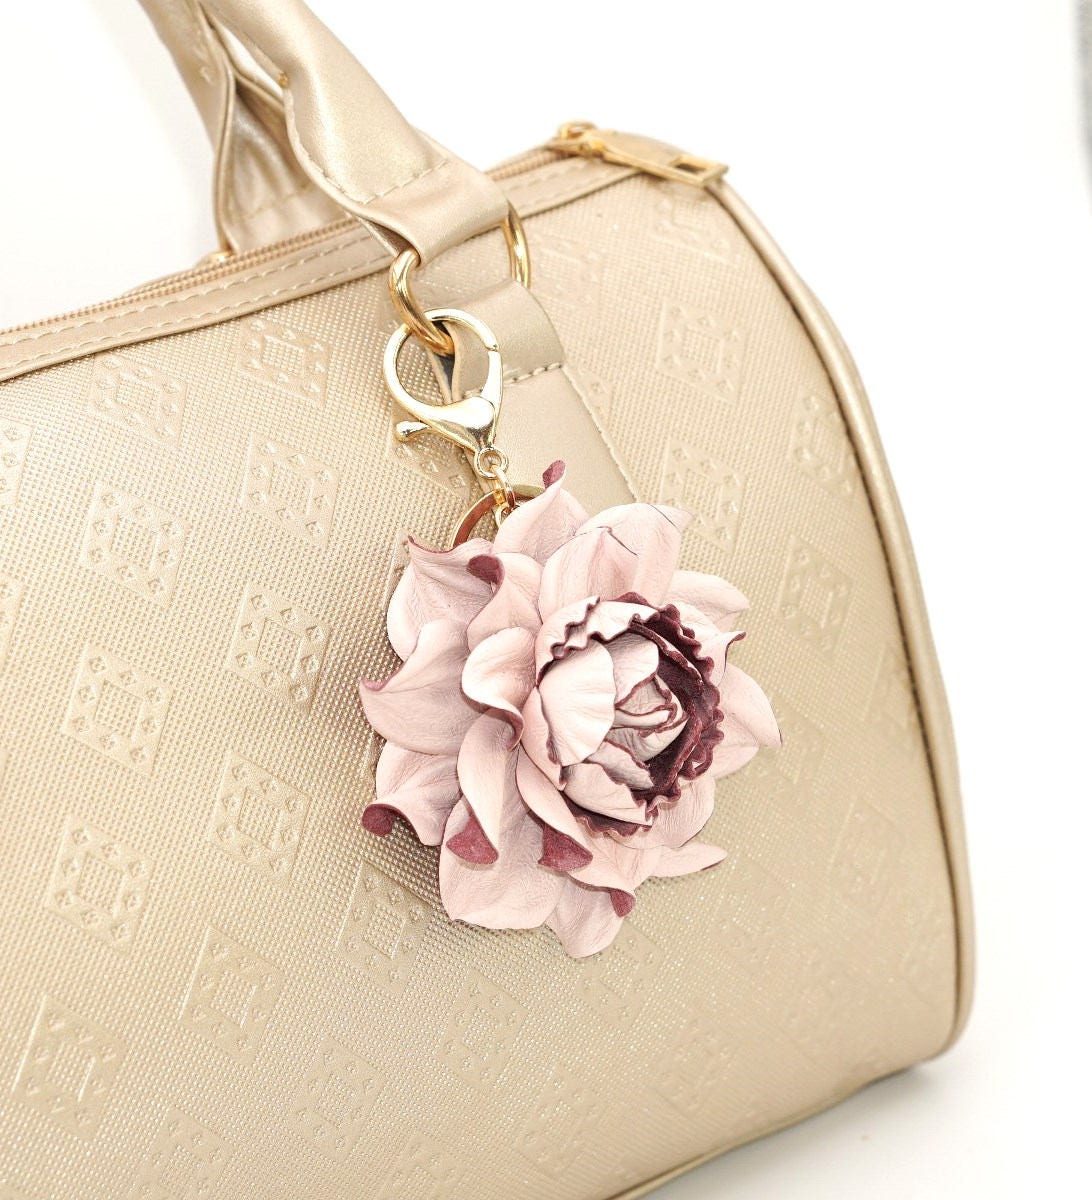 Does anyone have this bag charm? : r/handbags